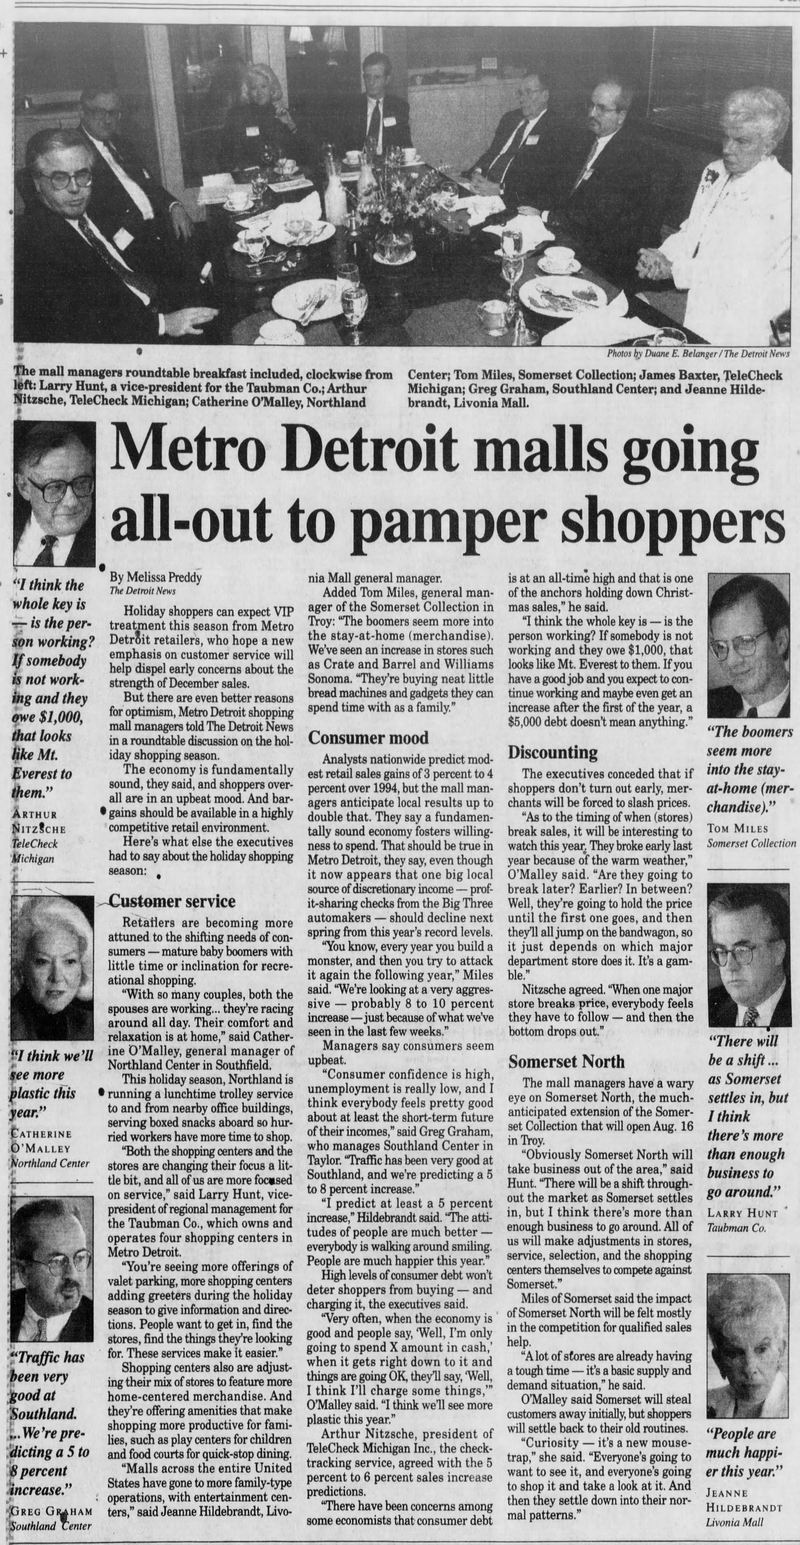 Northland Center (Northland Mall) - Mall Bosses Meet November 1995